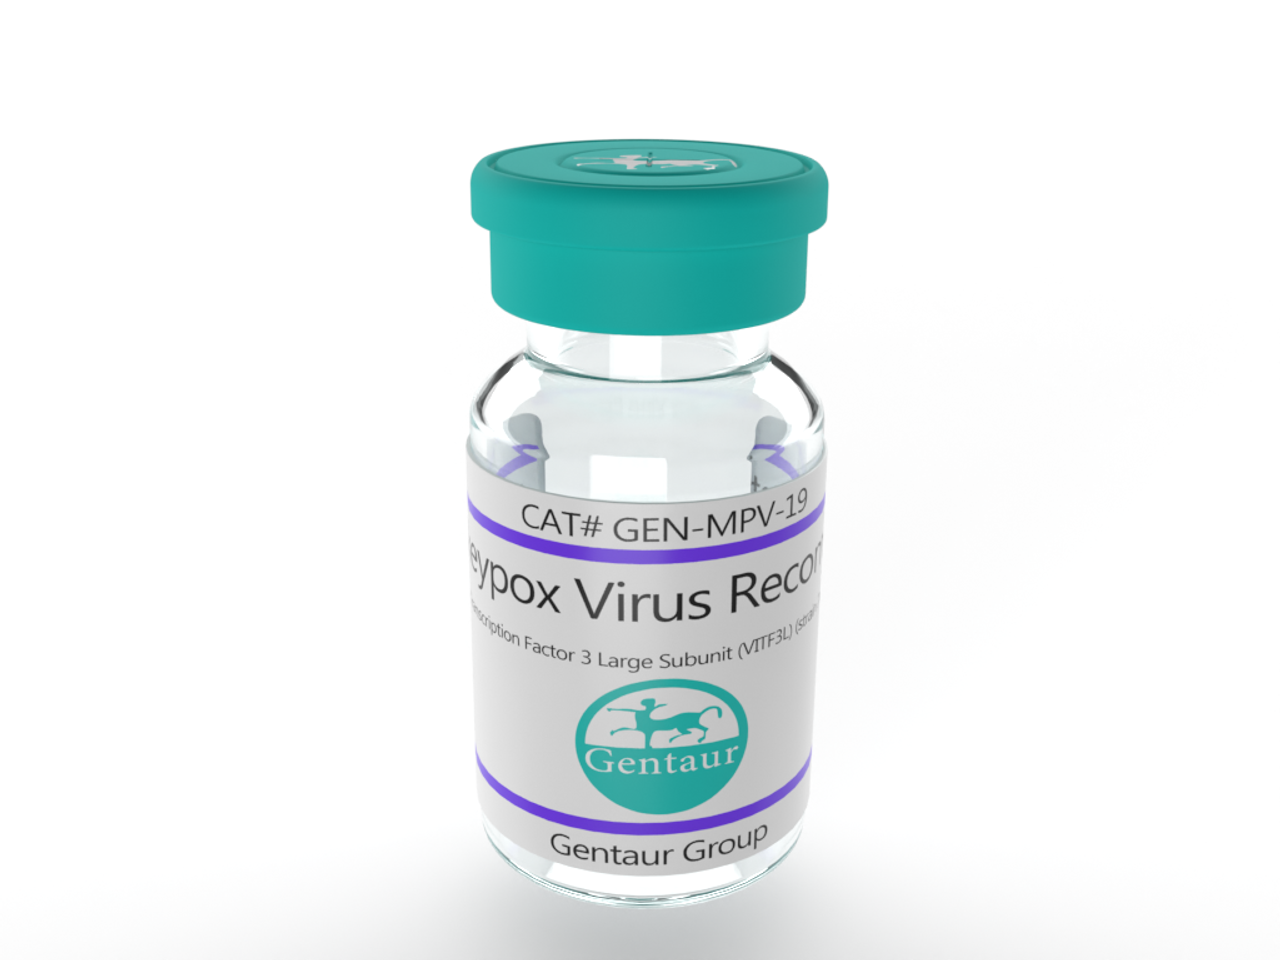 Monkeypox Virus Recombinant Intermediate Transcription Factor 3 Large Subunit (VITF3L) (strain Zaire-96-I-16) (MPX)| GEN-MPV-19